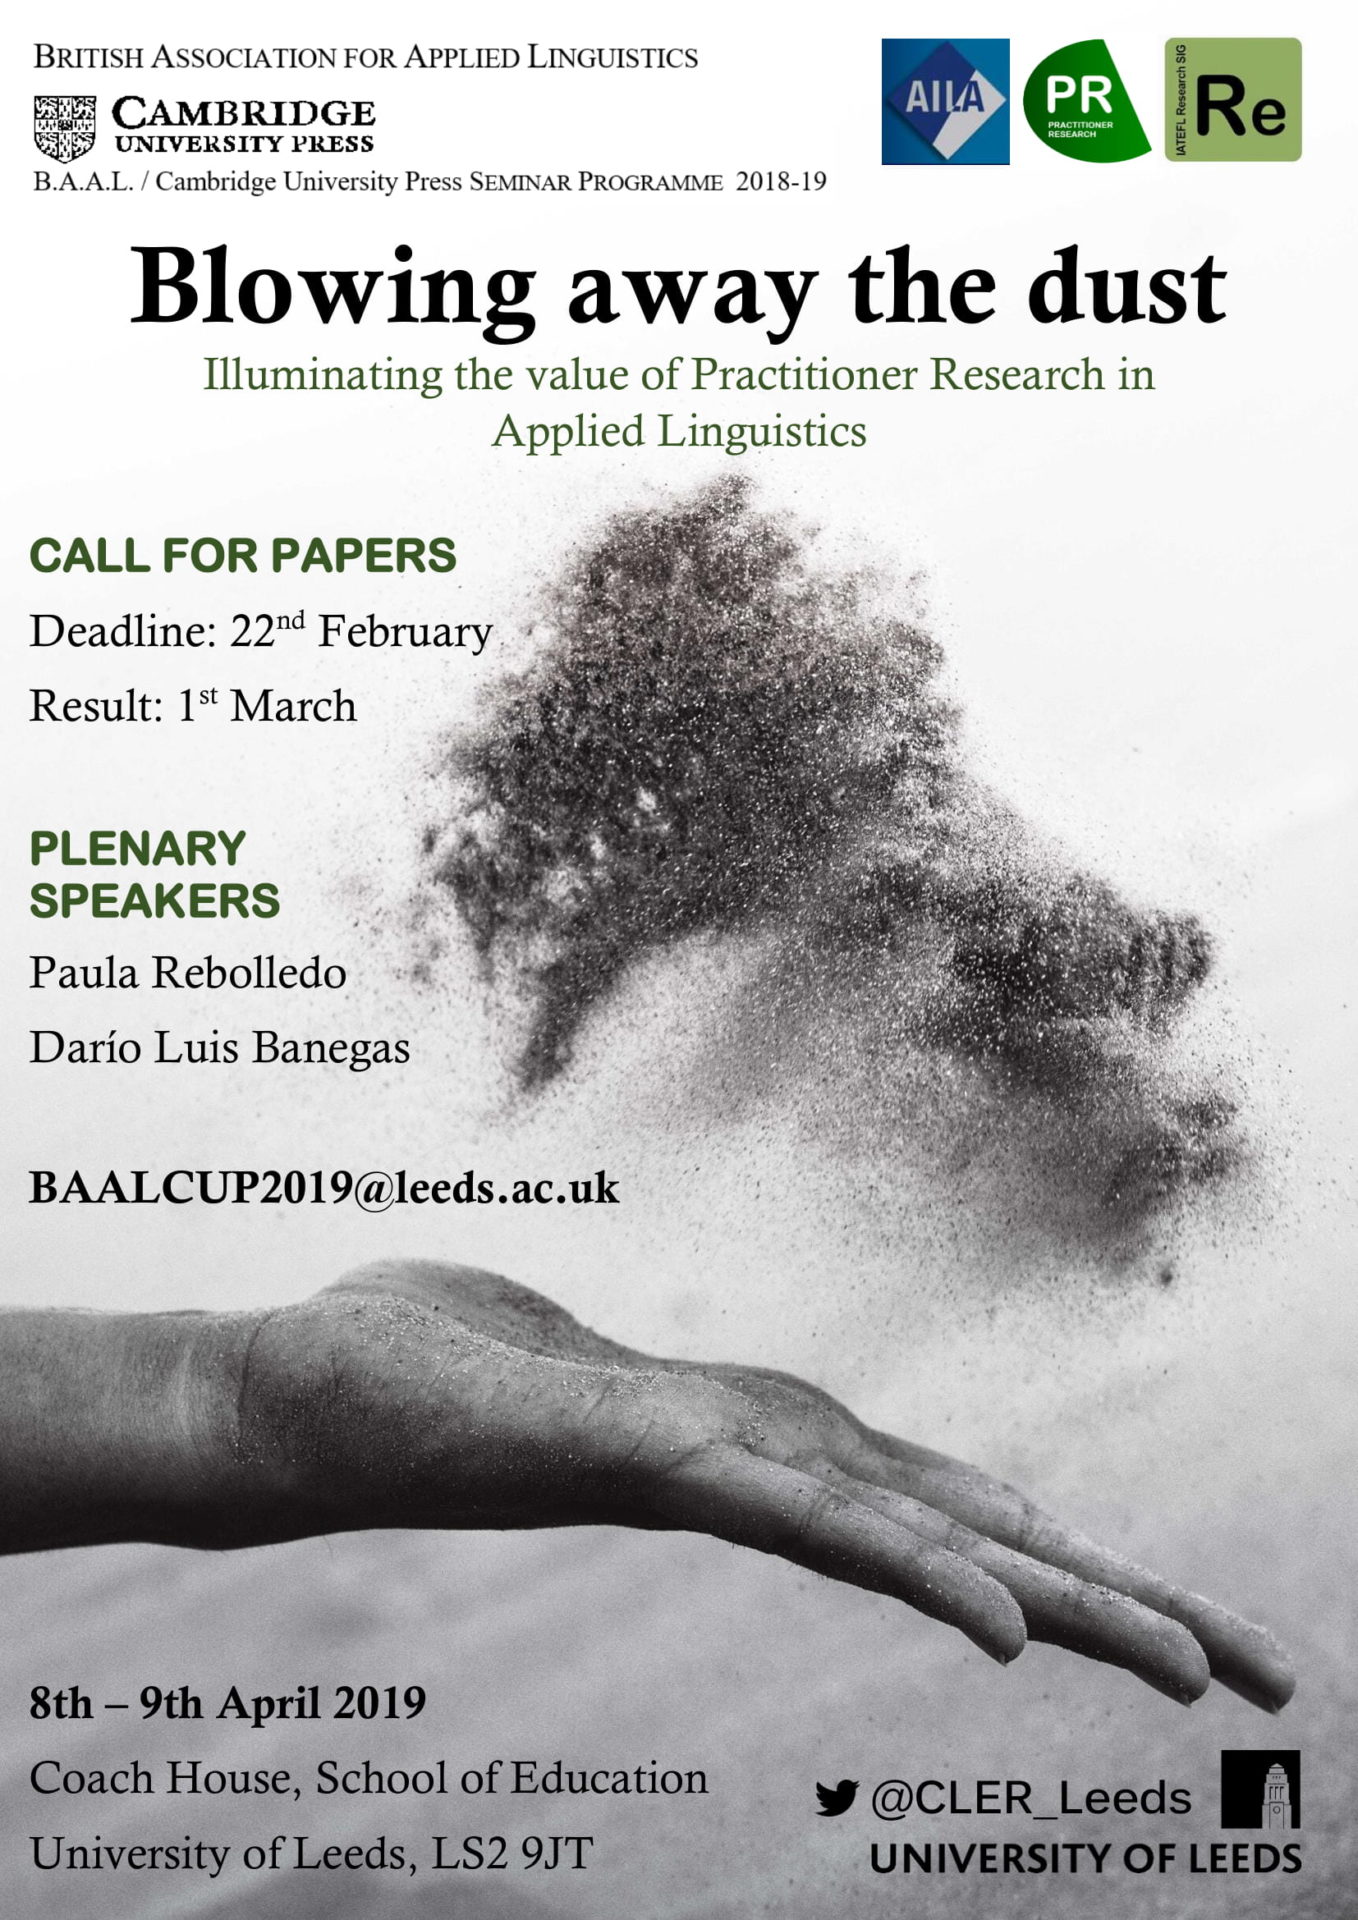 BAAL Cambridge University Press Seminar April 8th – 9th 2019